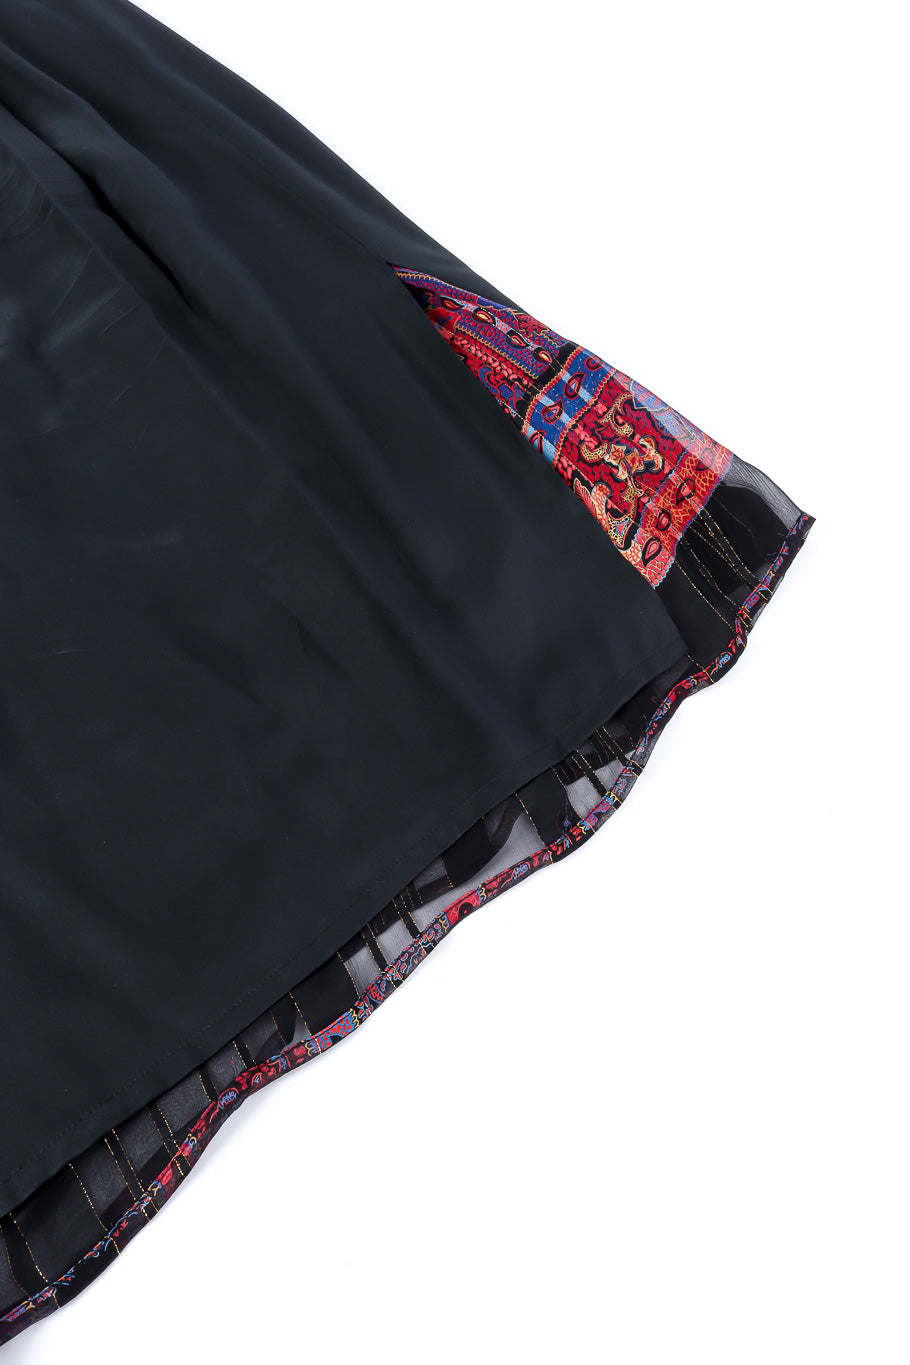 Skirt and top by Neiman Marcus flat lay skirt hem @recessla